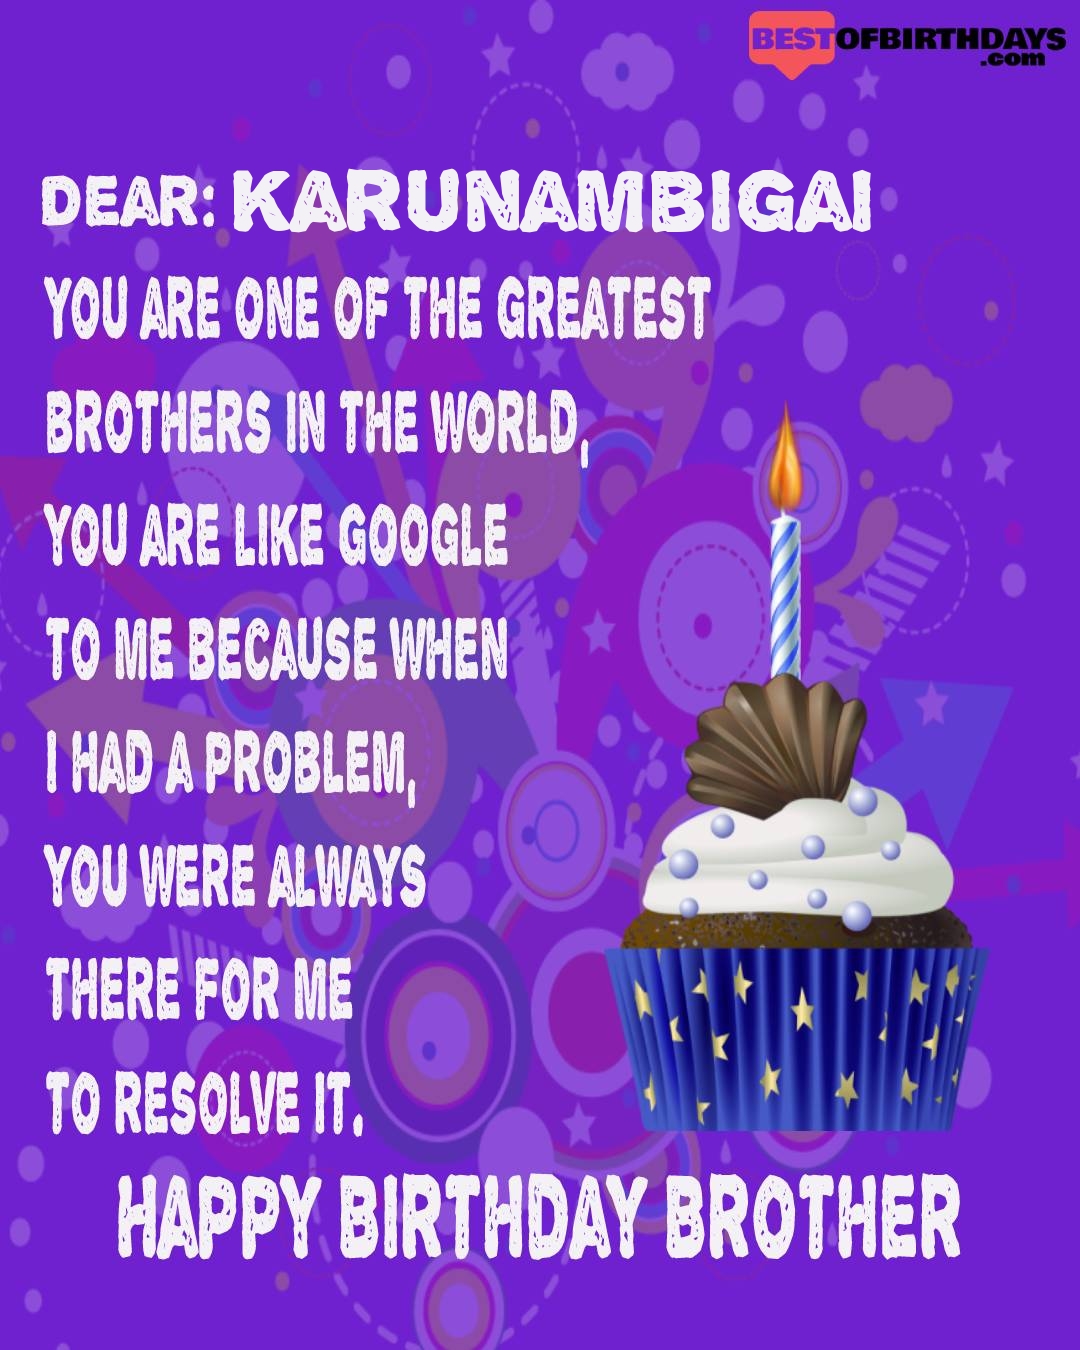 Happy birthday karunambigai bhai brother bro